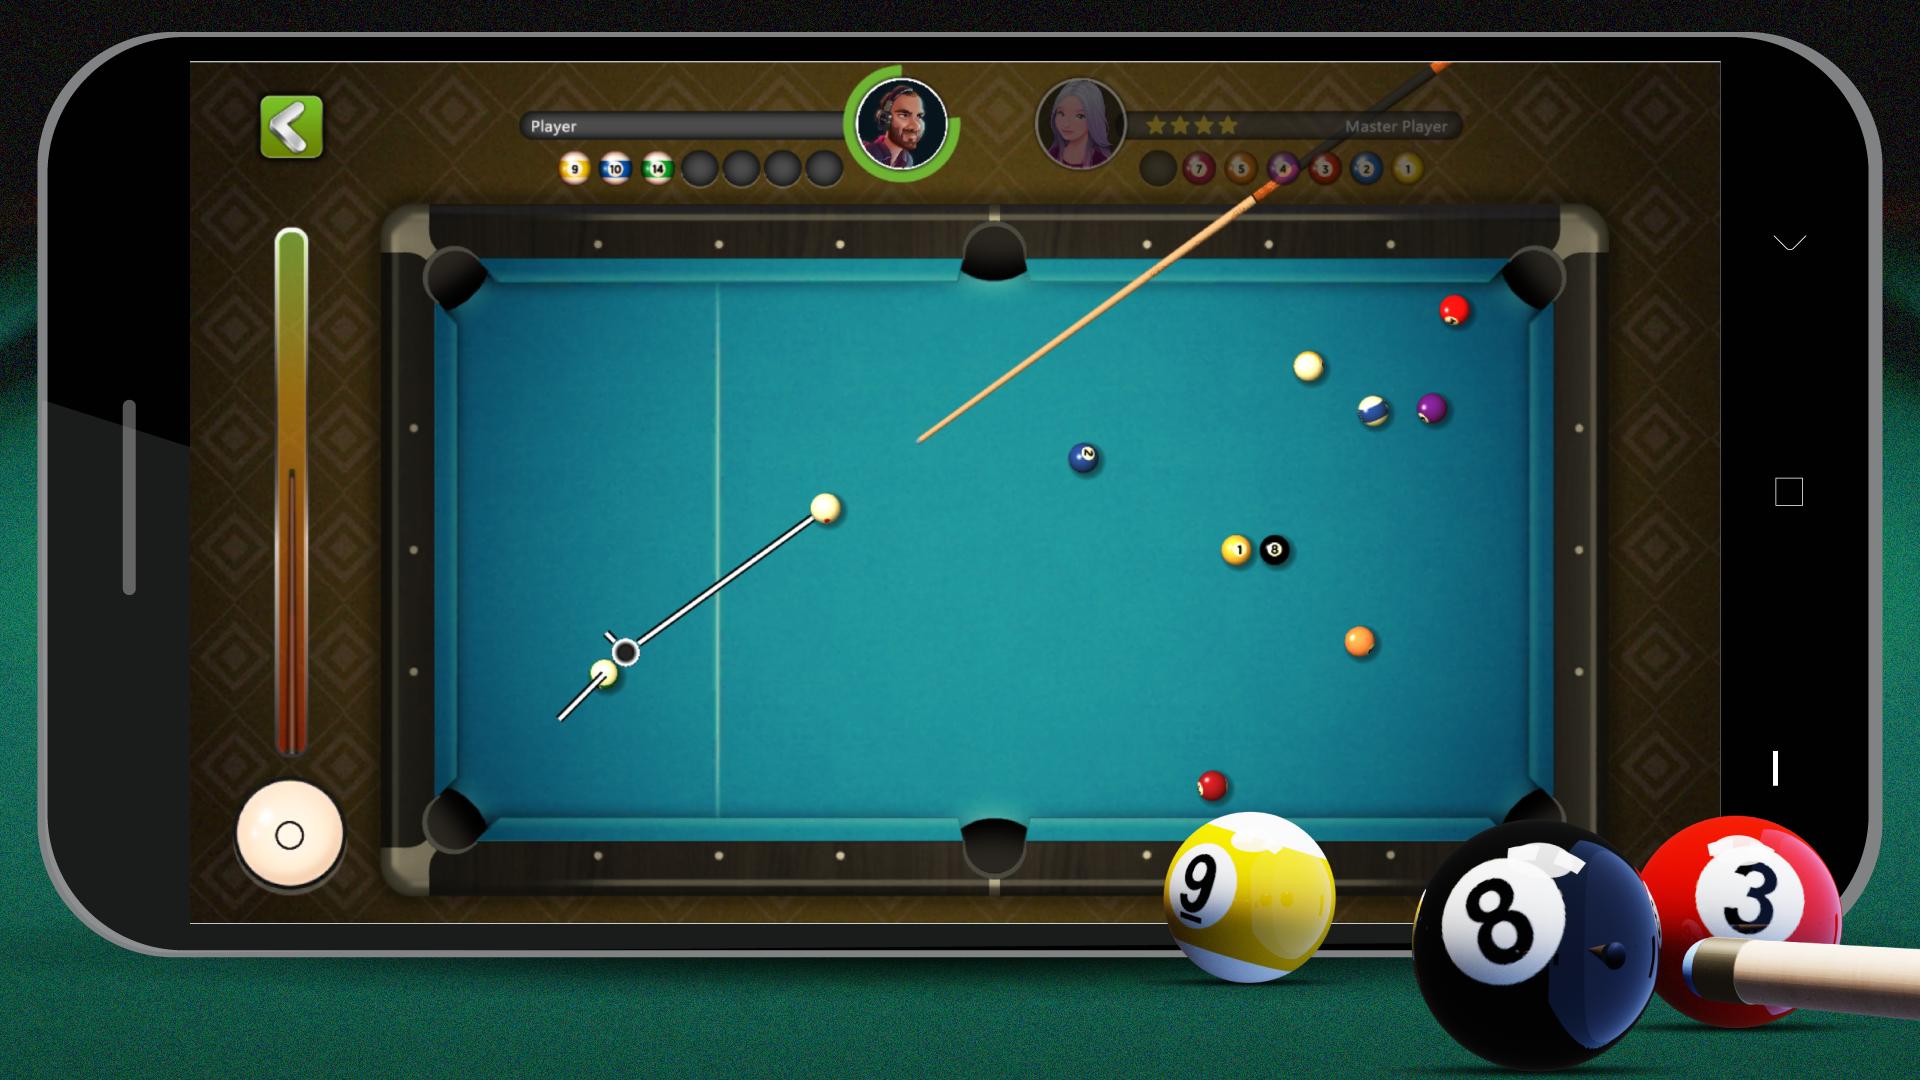 8 Ball Billiards- Offline Free Pool Game 1.51 Screenshot 14